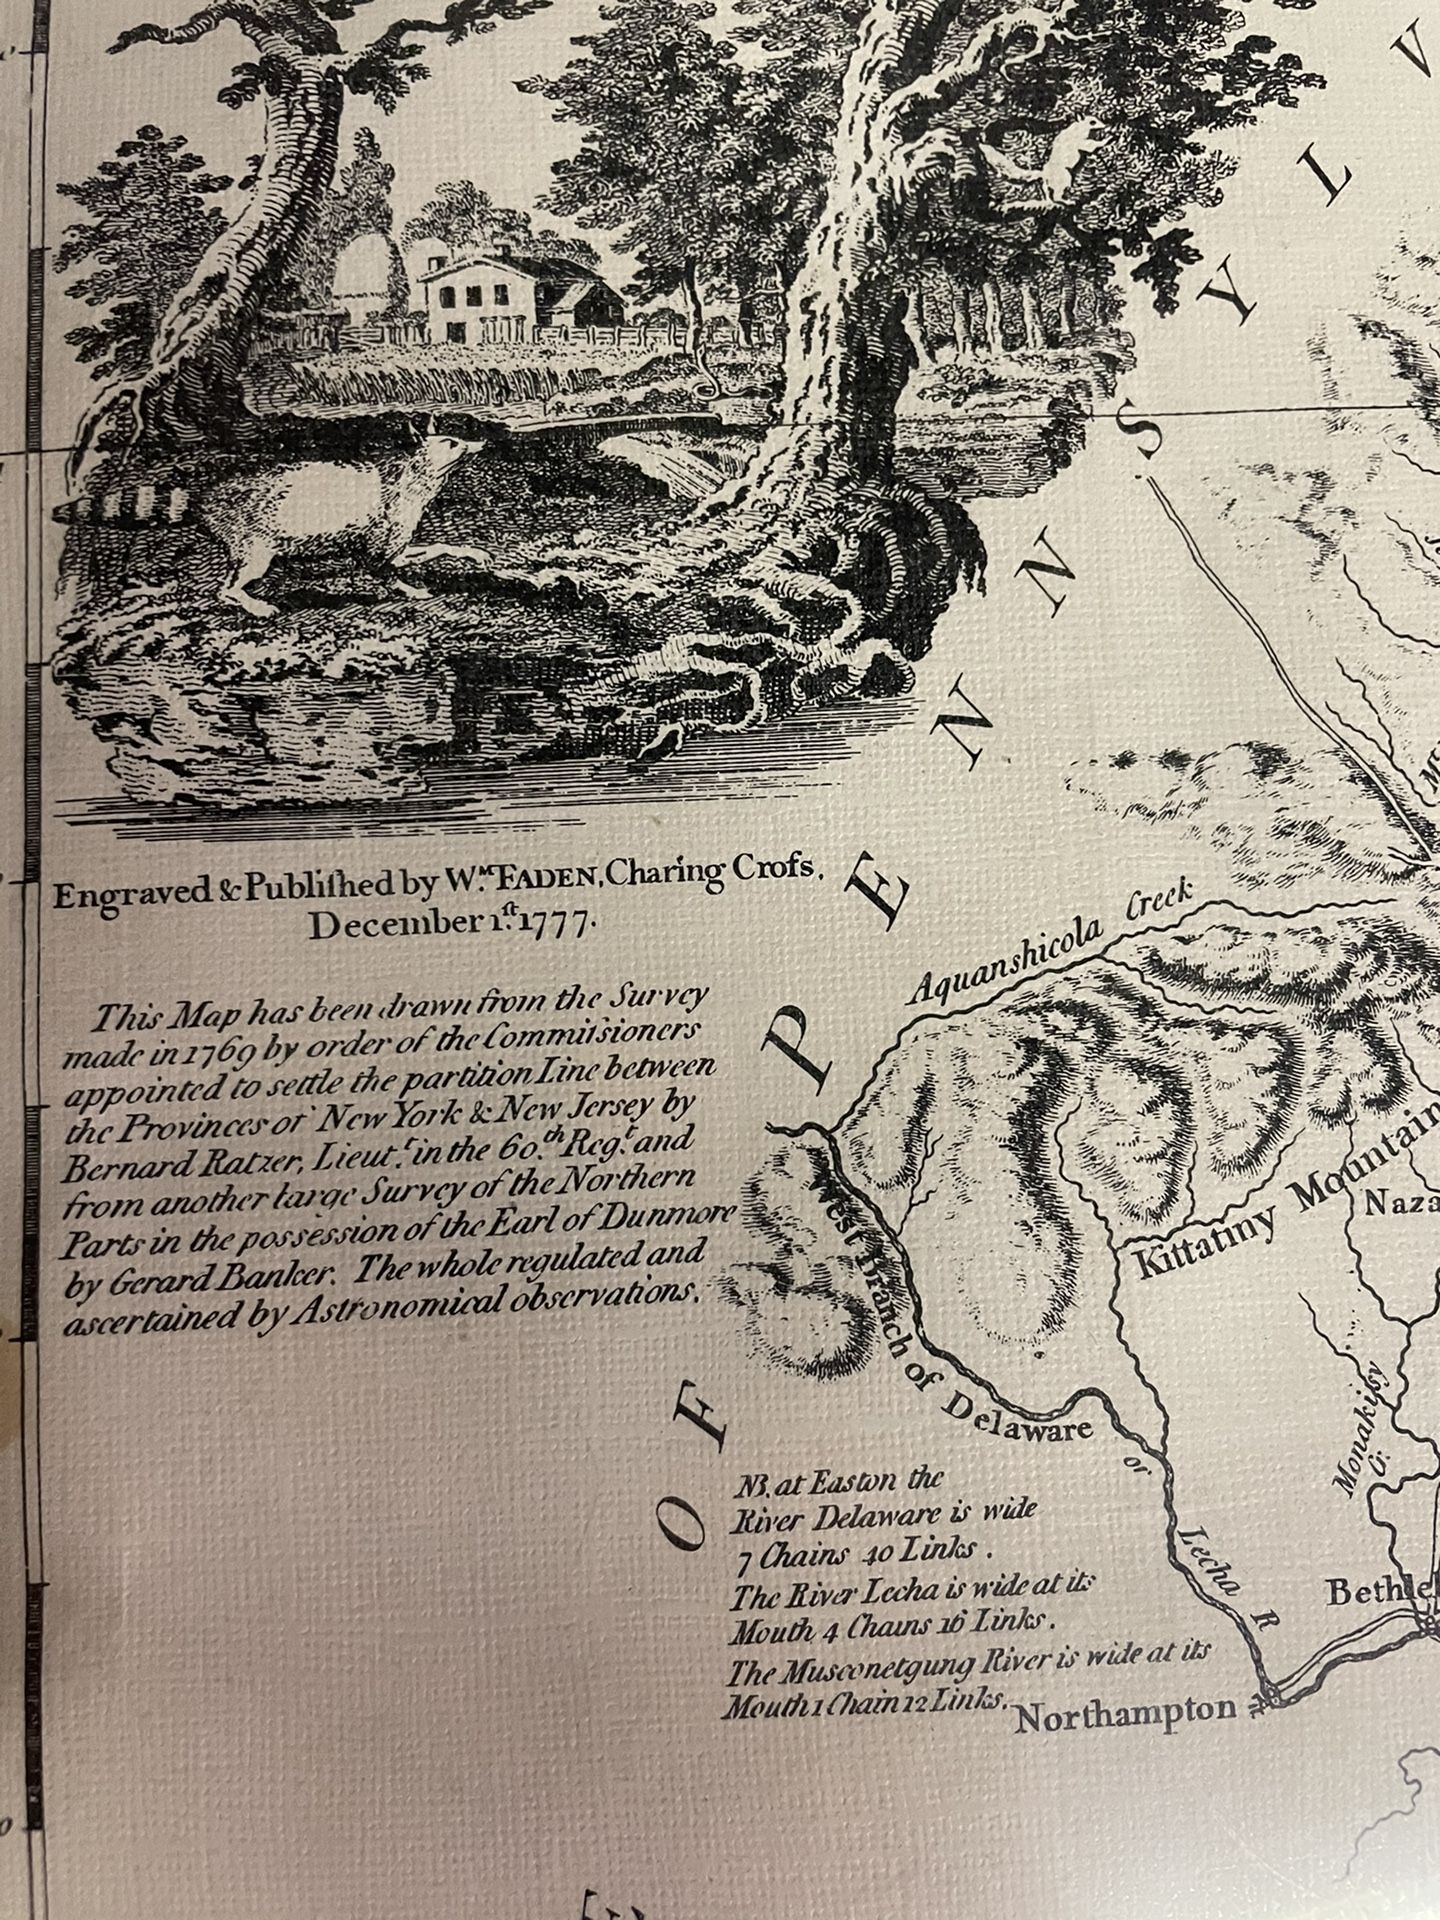 Very Rare December 1777 New Jersey Map “The Jerseys”